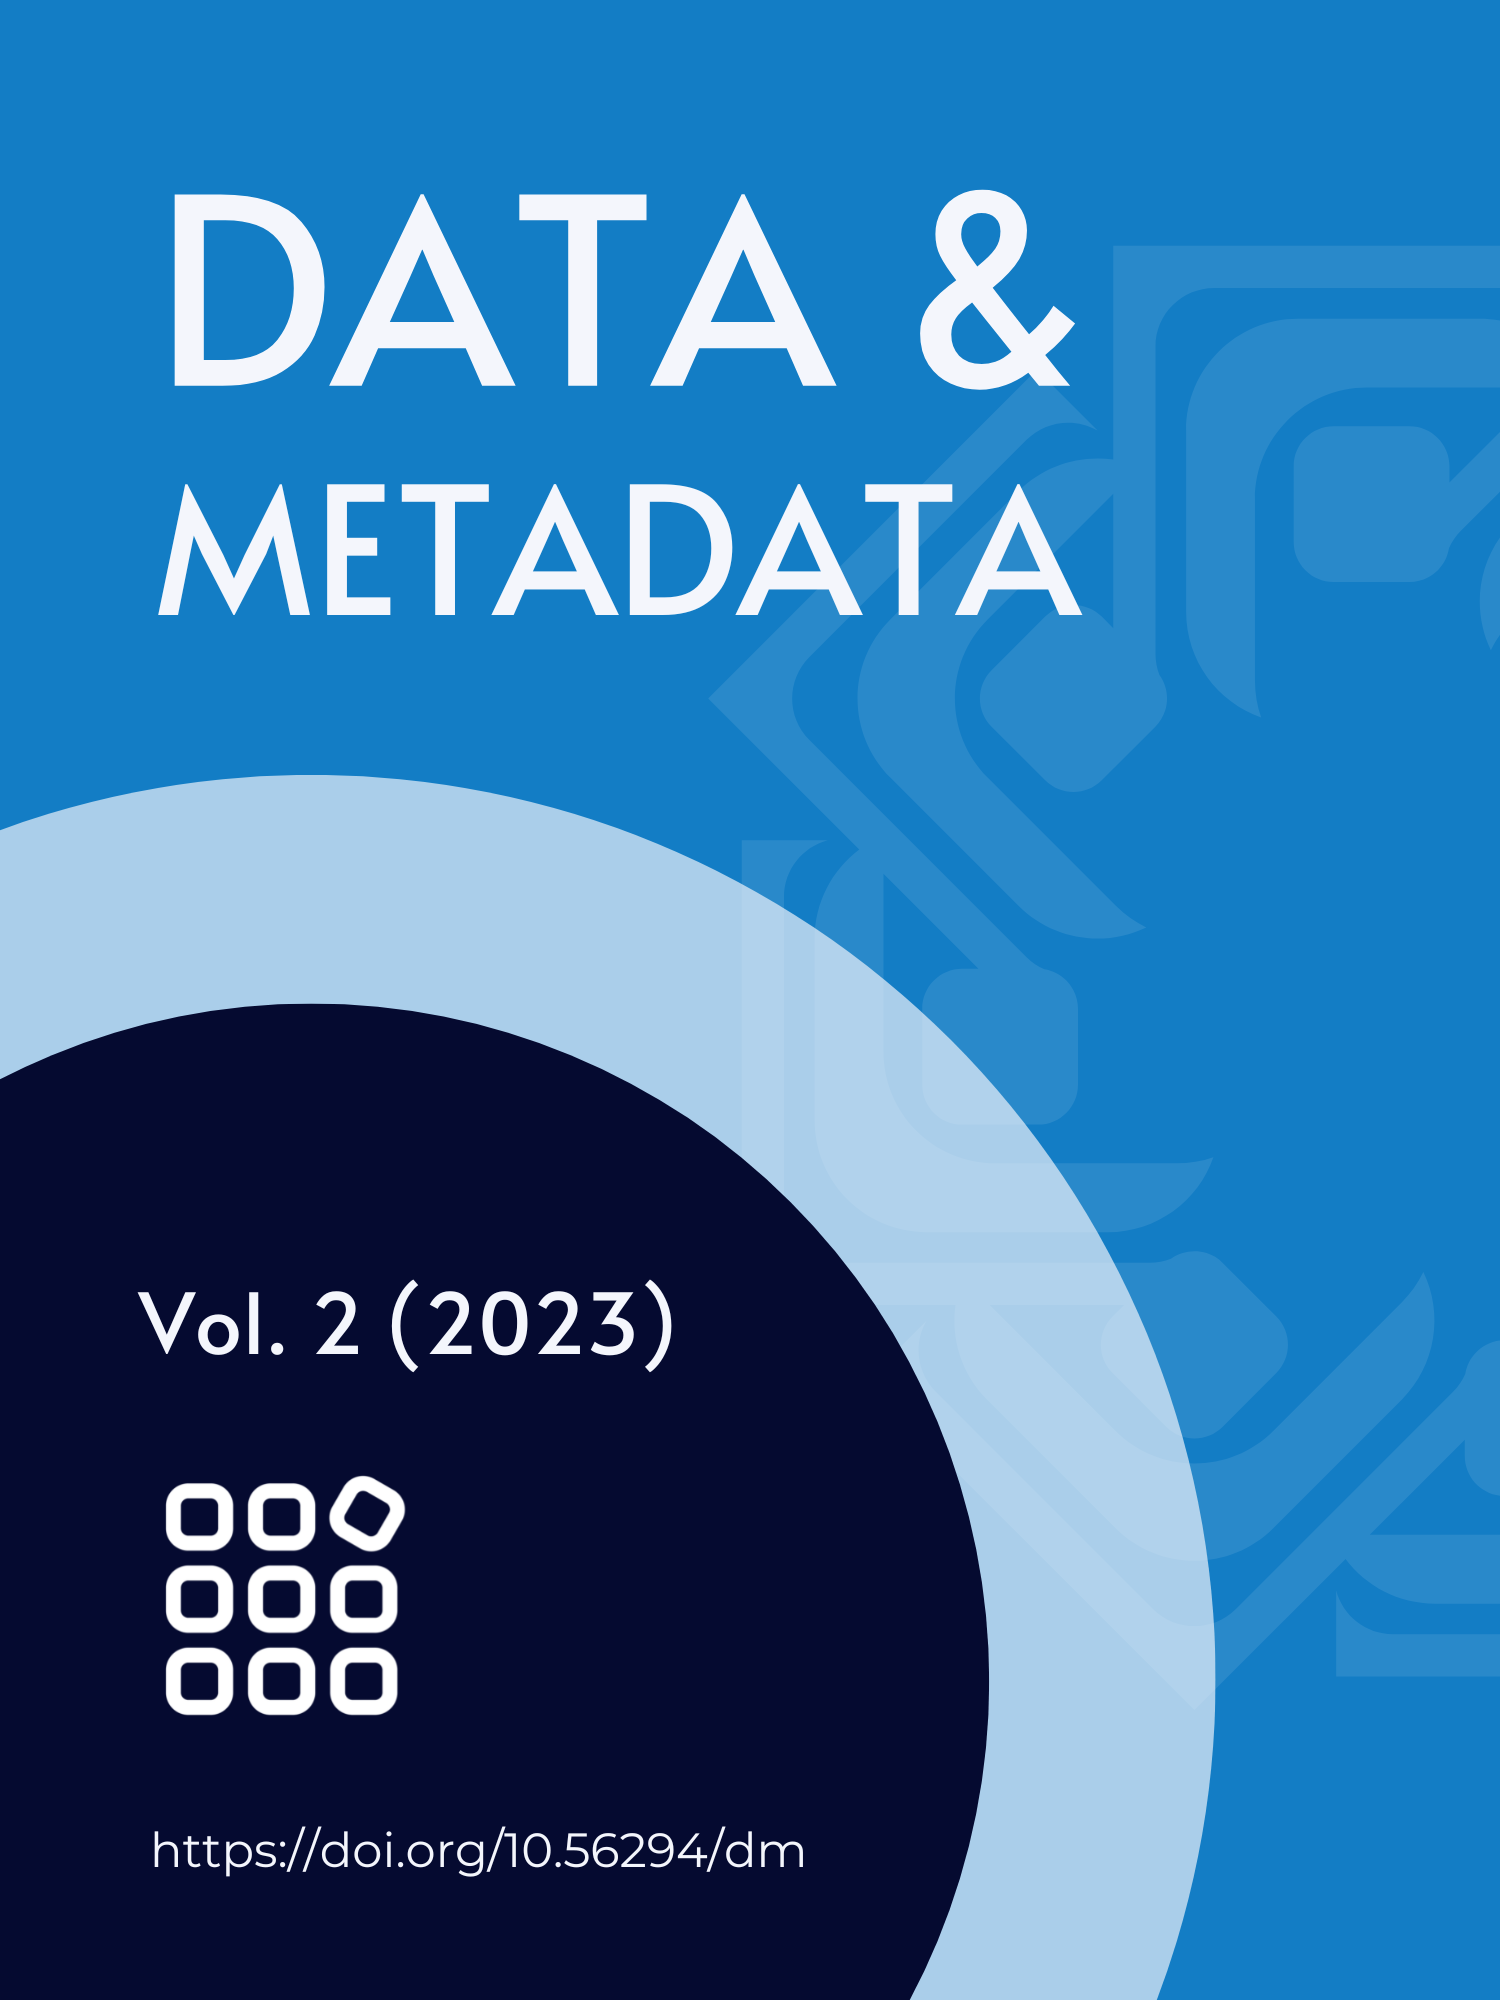 					View Vol. 2 (2023): Data & Metadata
				